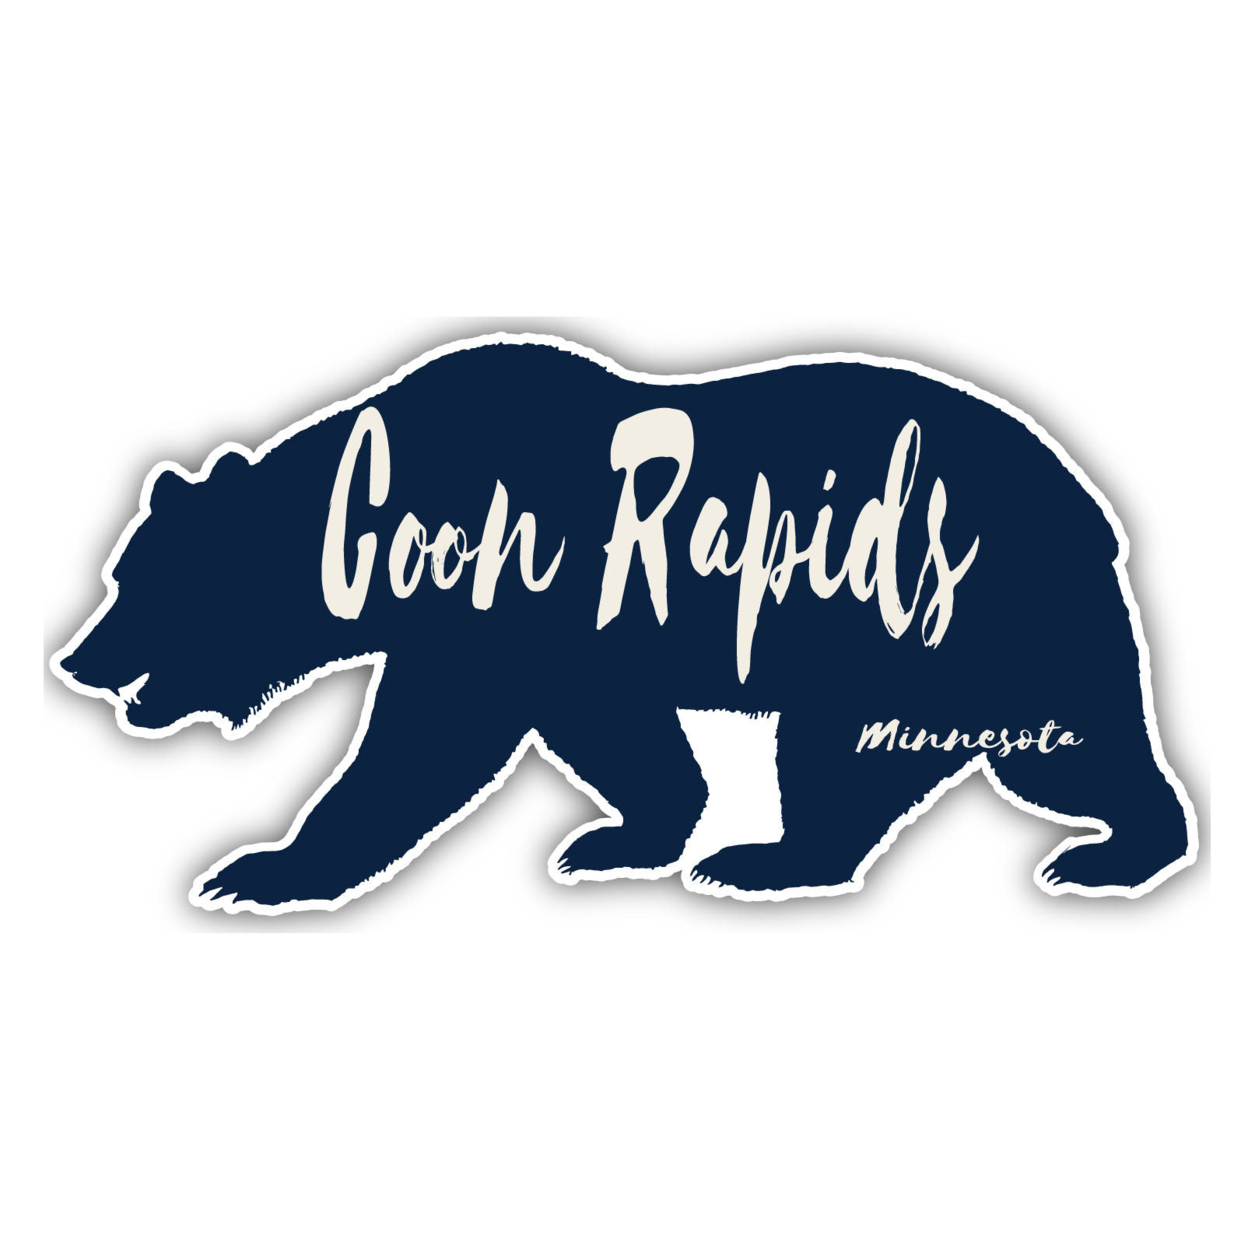 Coon Rapids Minnesota Souvenir Decorative Stickers (Choose Theme And Size) - Single Unit, 4-Inch, Bear